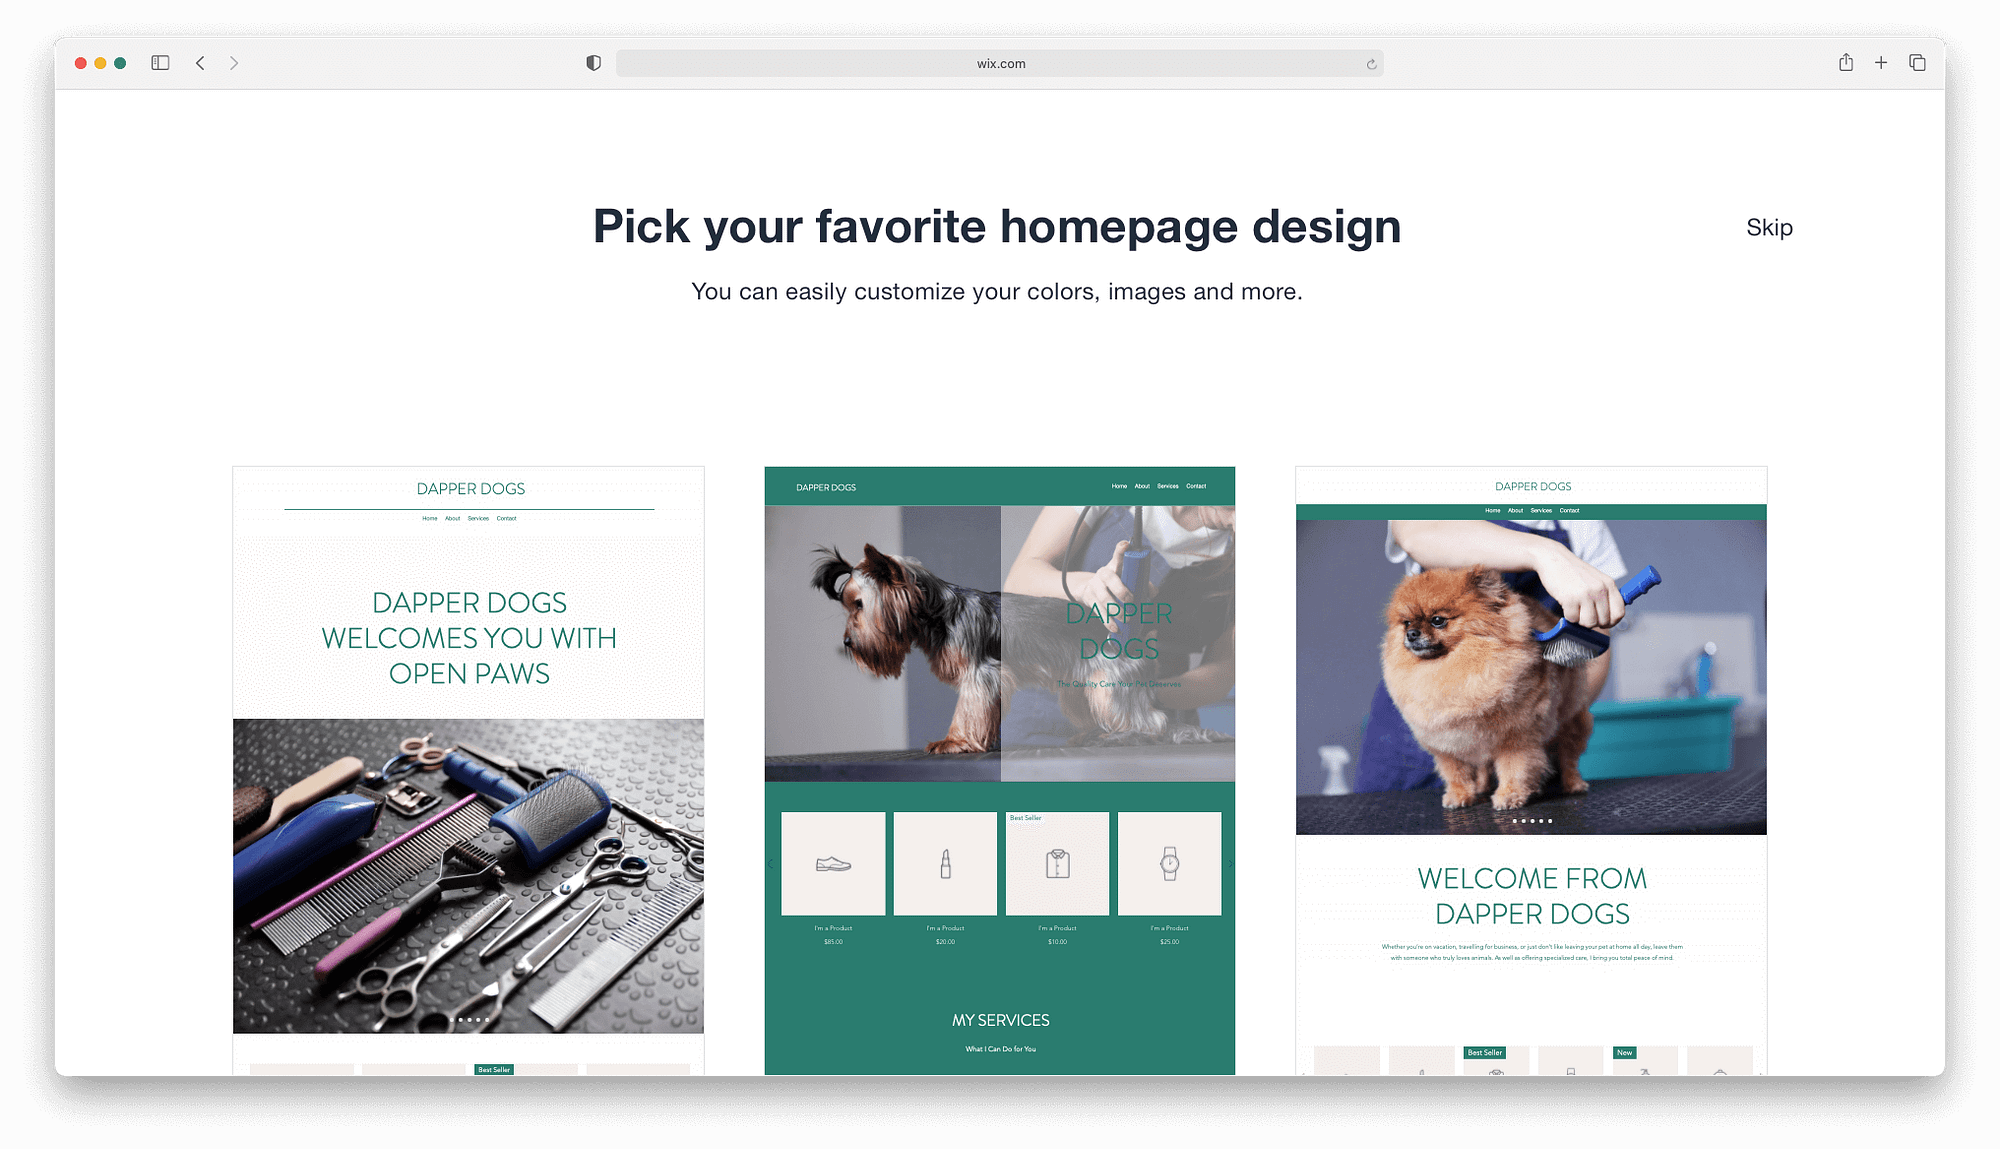 Using a pre-made homepage design.